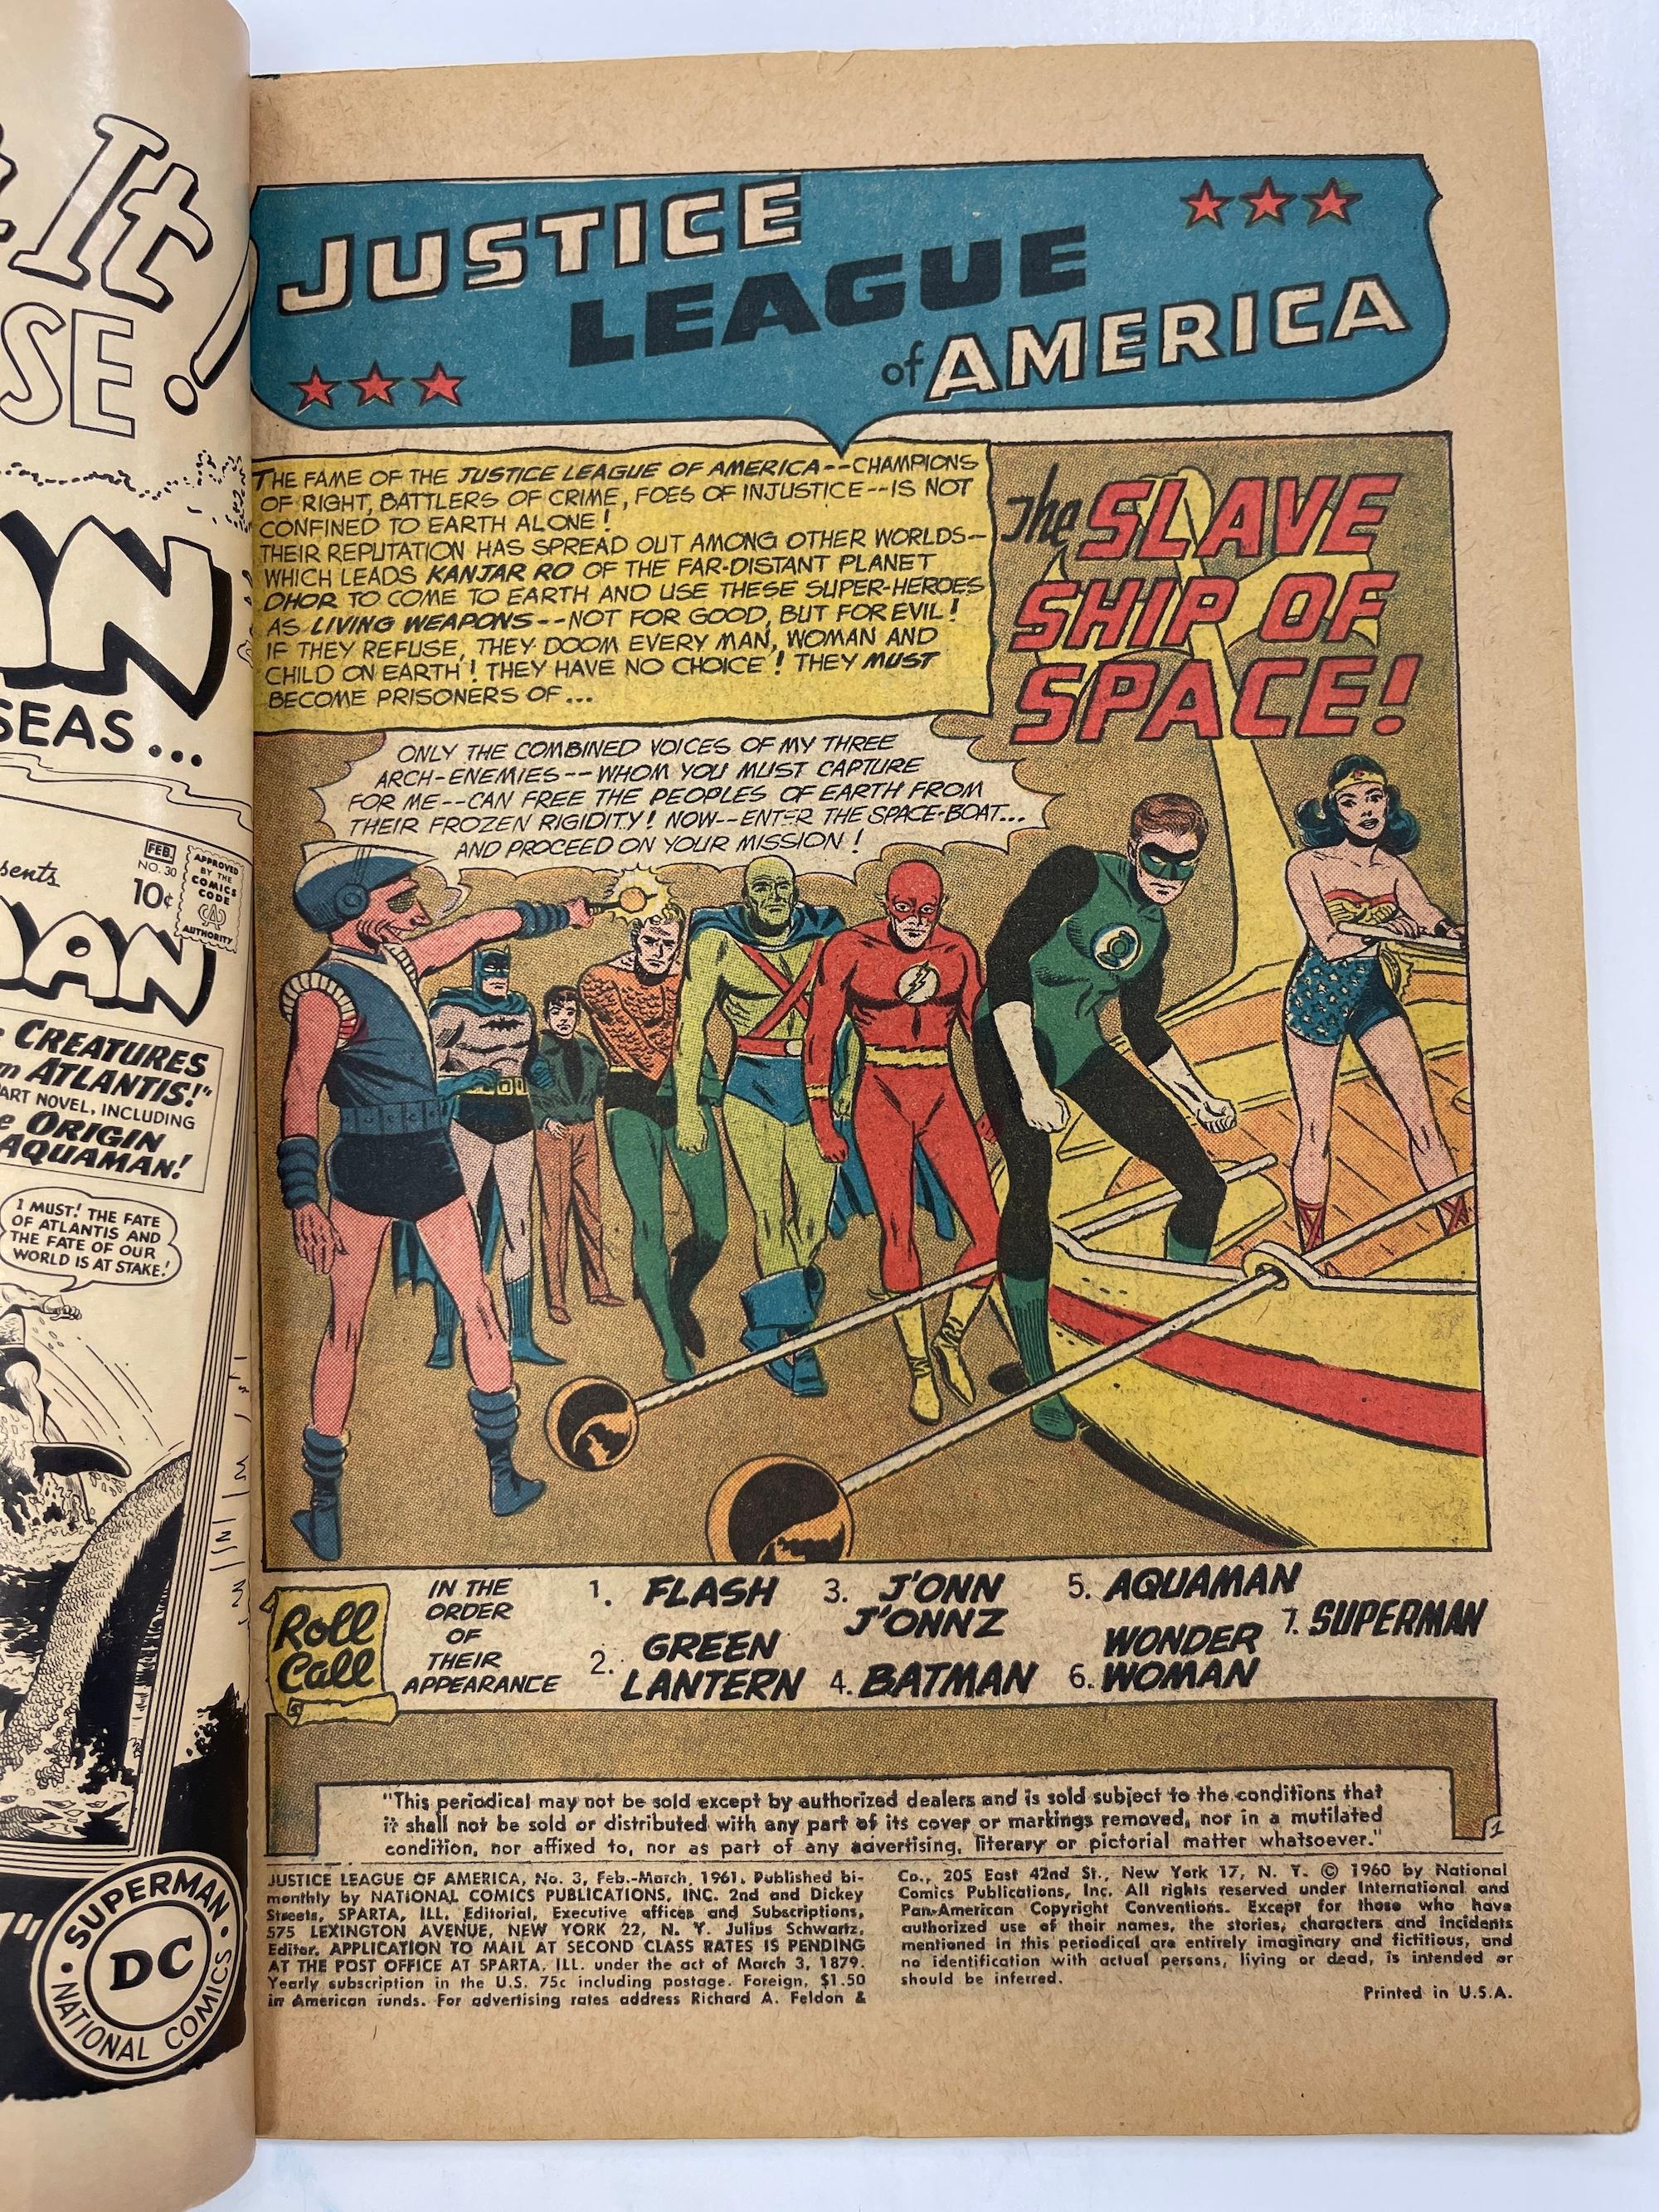 Vintage Justice League of america #3 Comic Book 1961 "Slave Ship of Space!" DC Comics